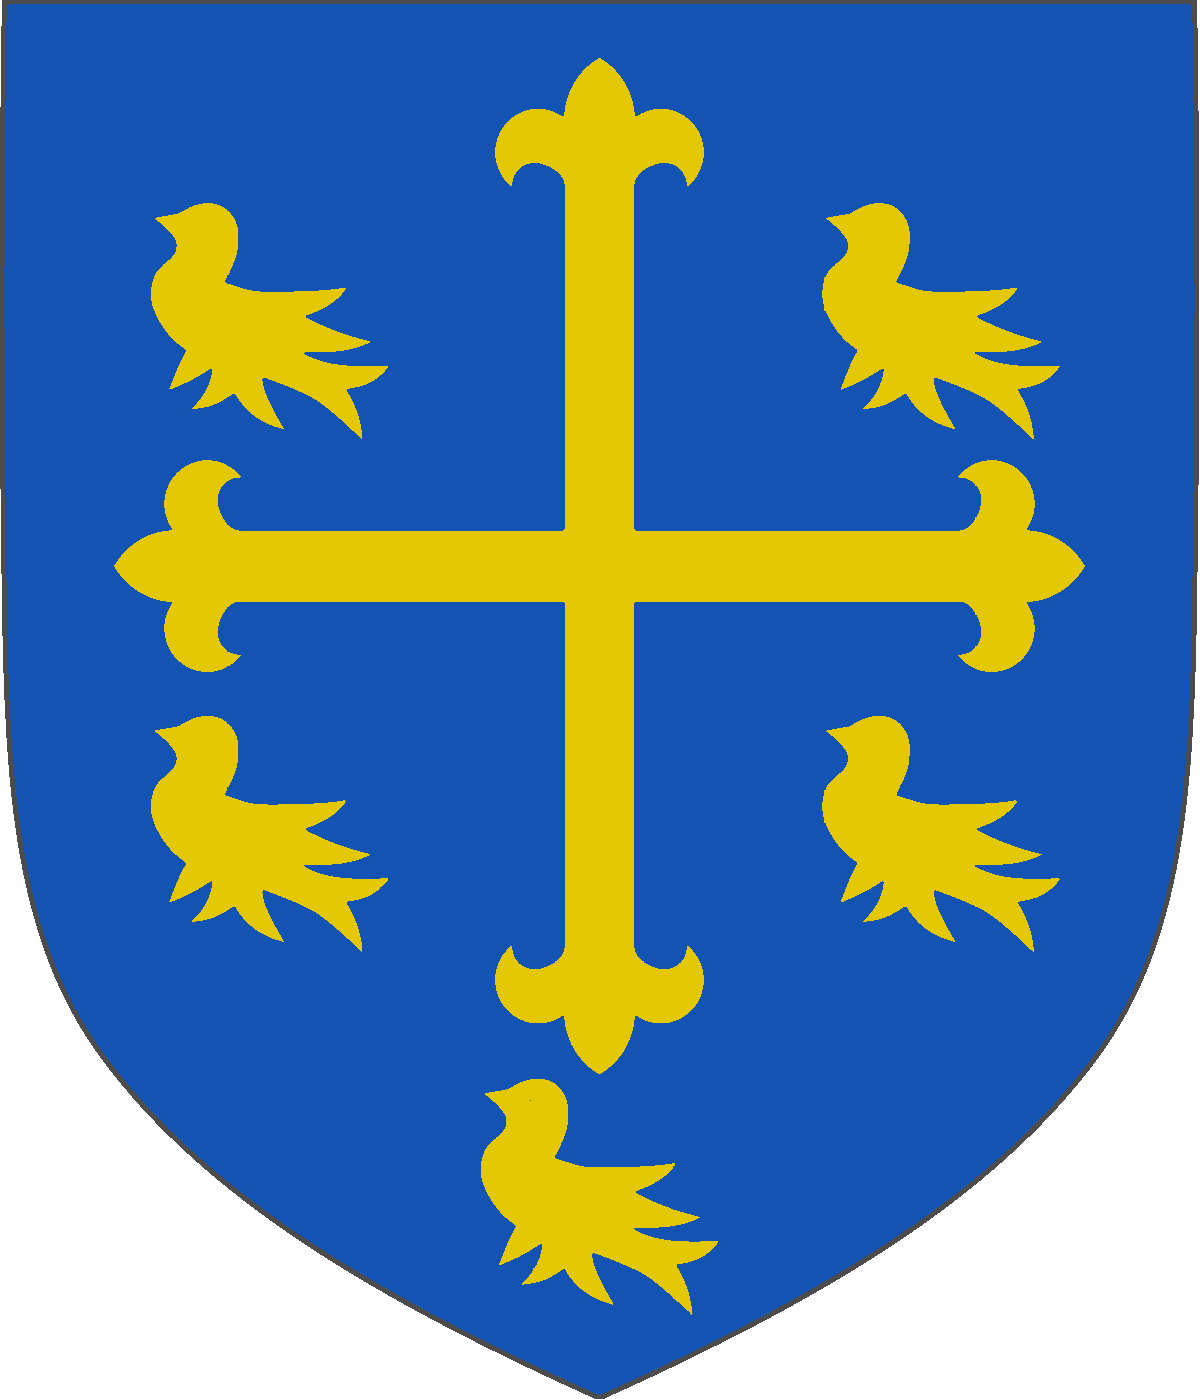 saint Edward the confessor shield